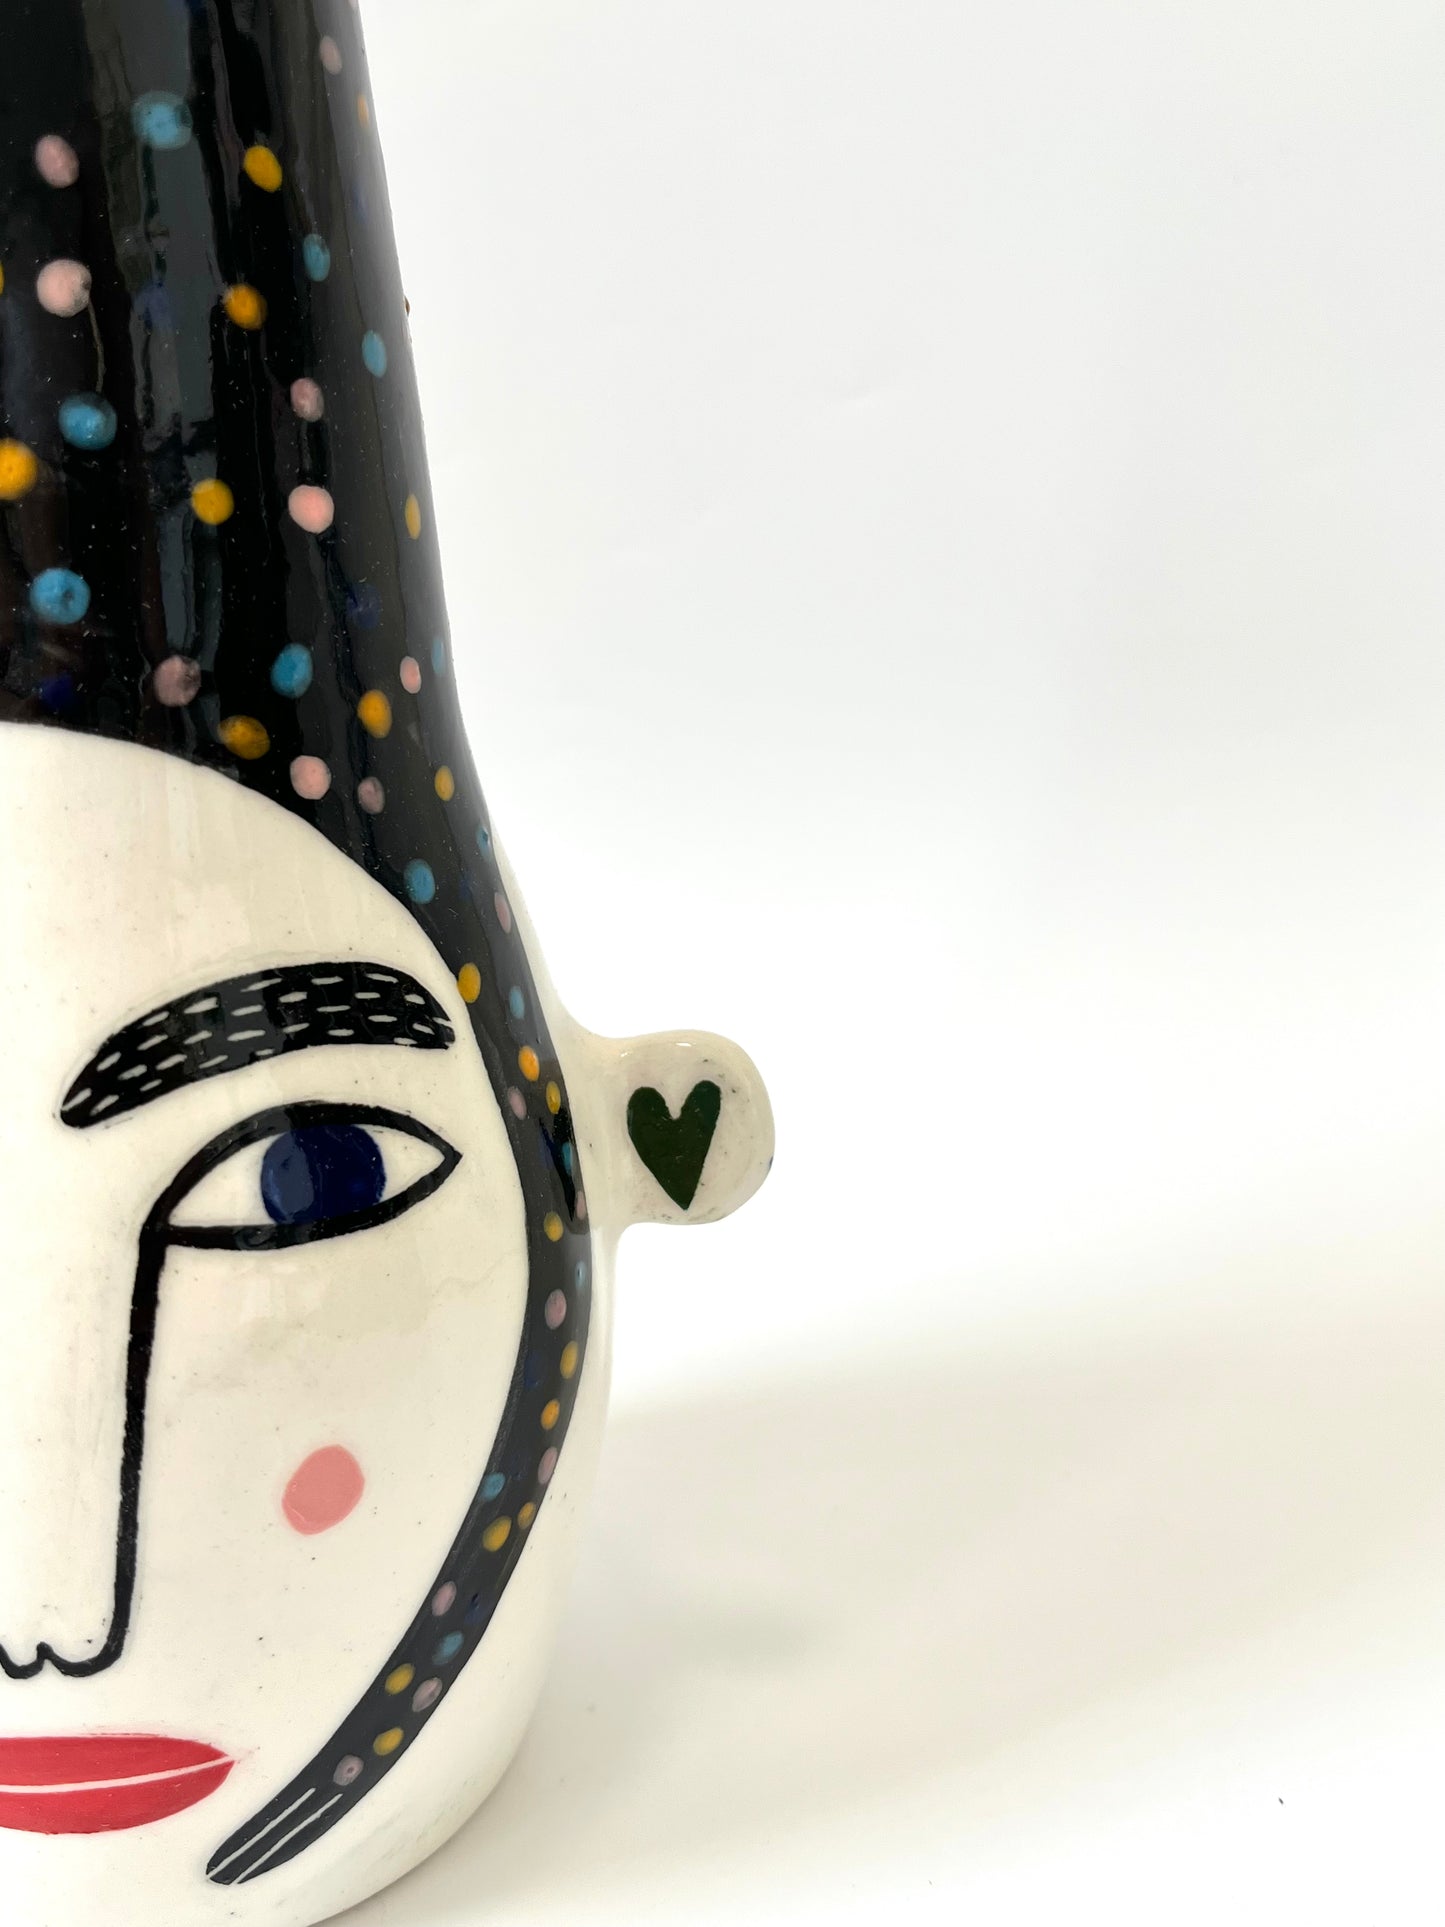 Ceramic Cat Human Vase #6 by Studio Soph